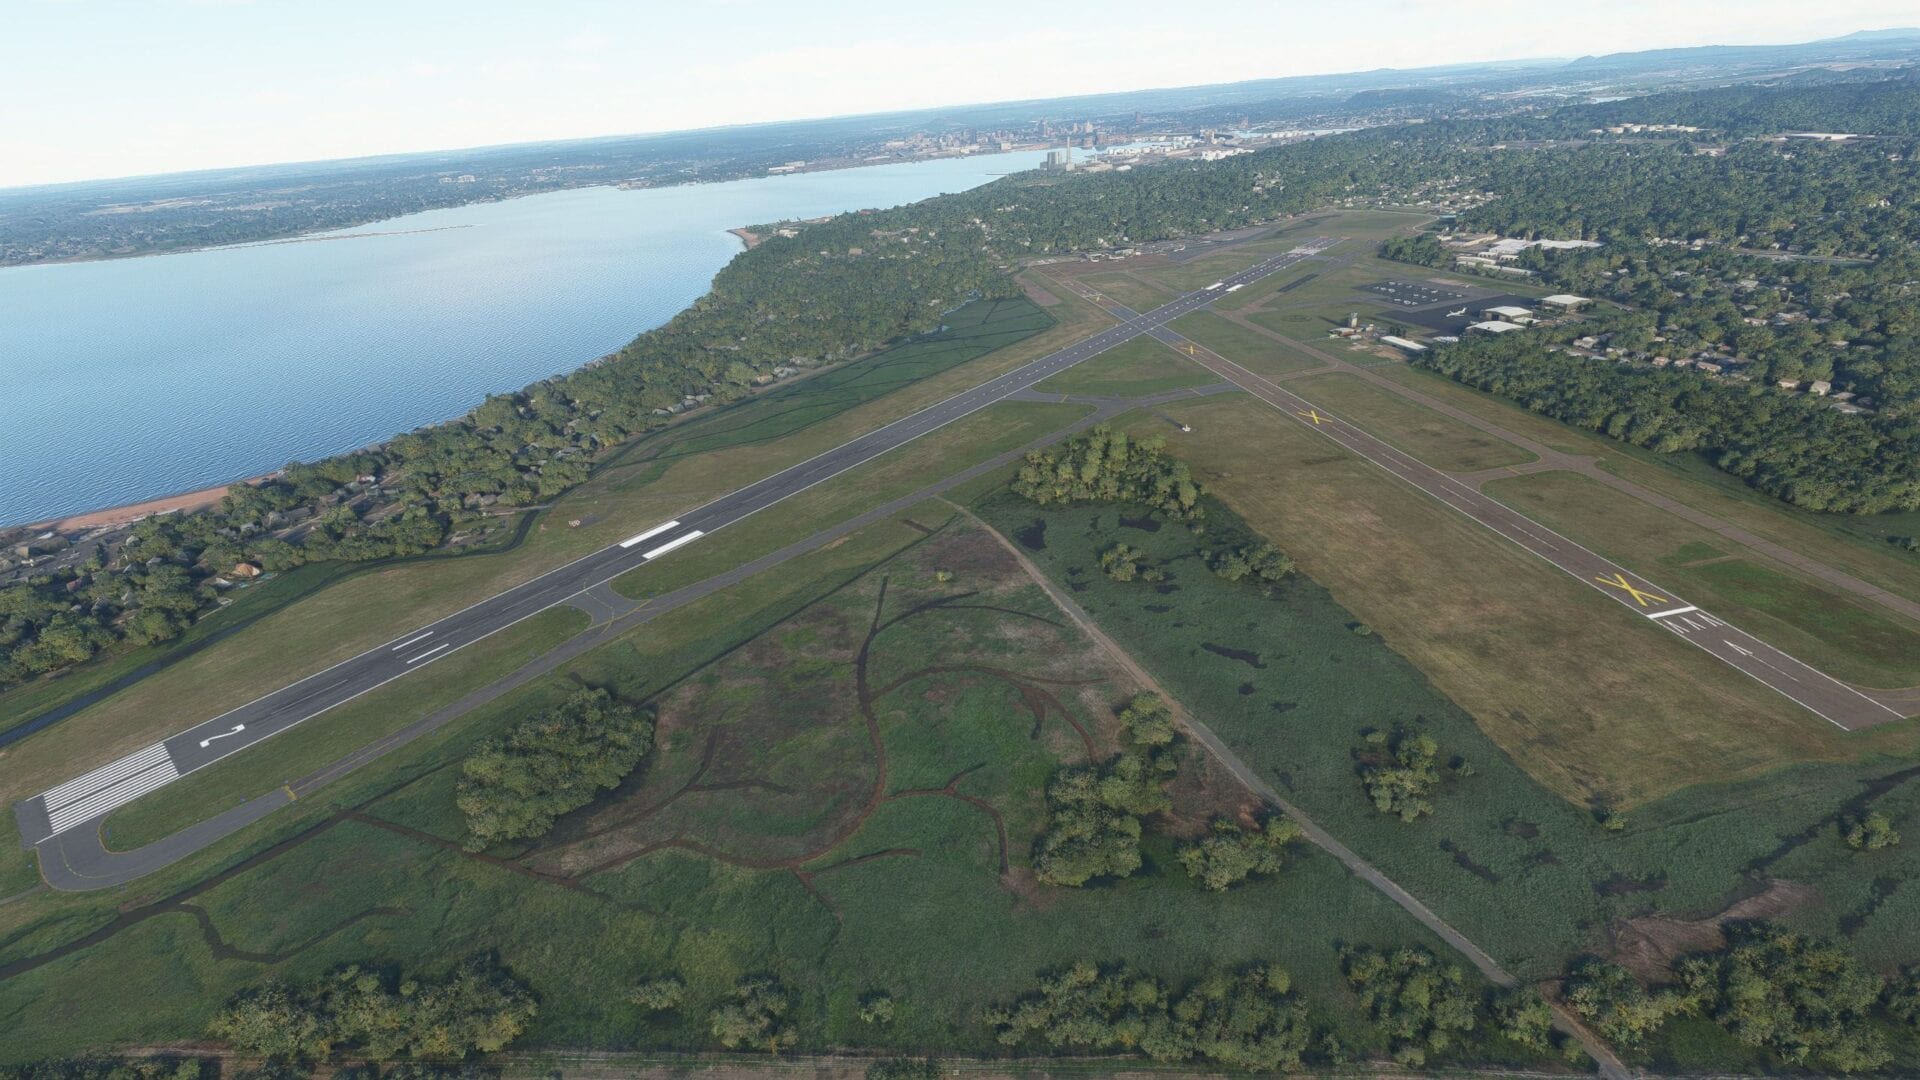 Microsoft Flight Simulator Tweed New Haven Airport 